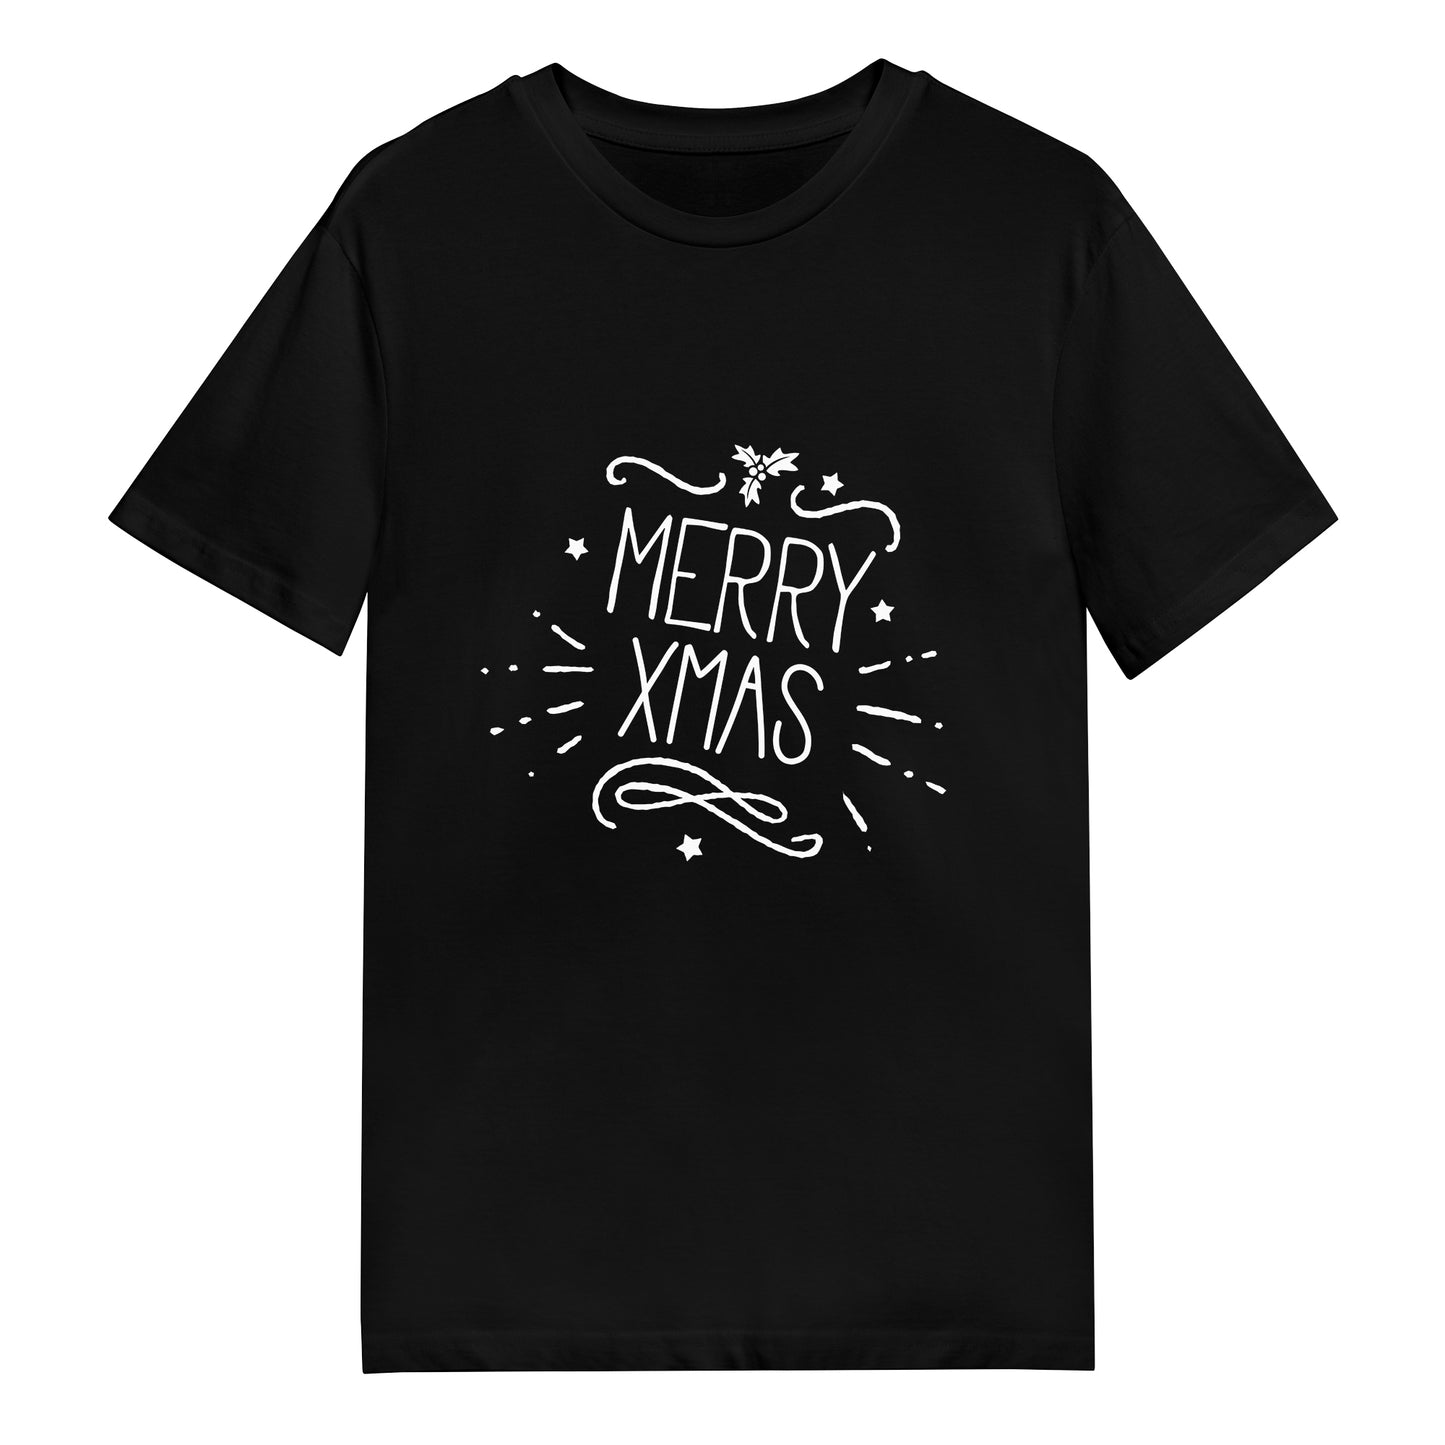 Men's T-Shirt - Merry Xmas